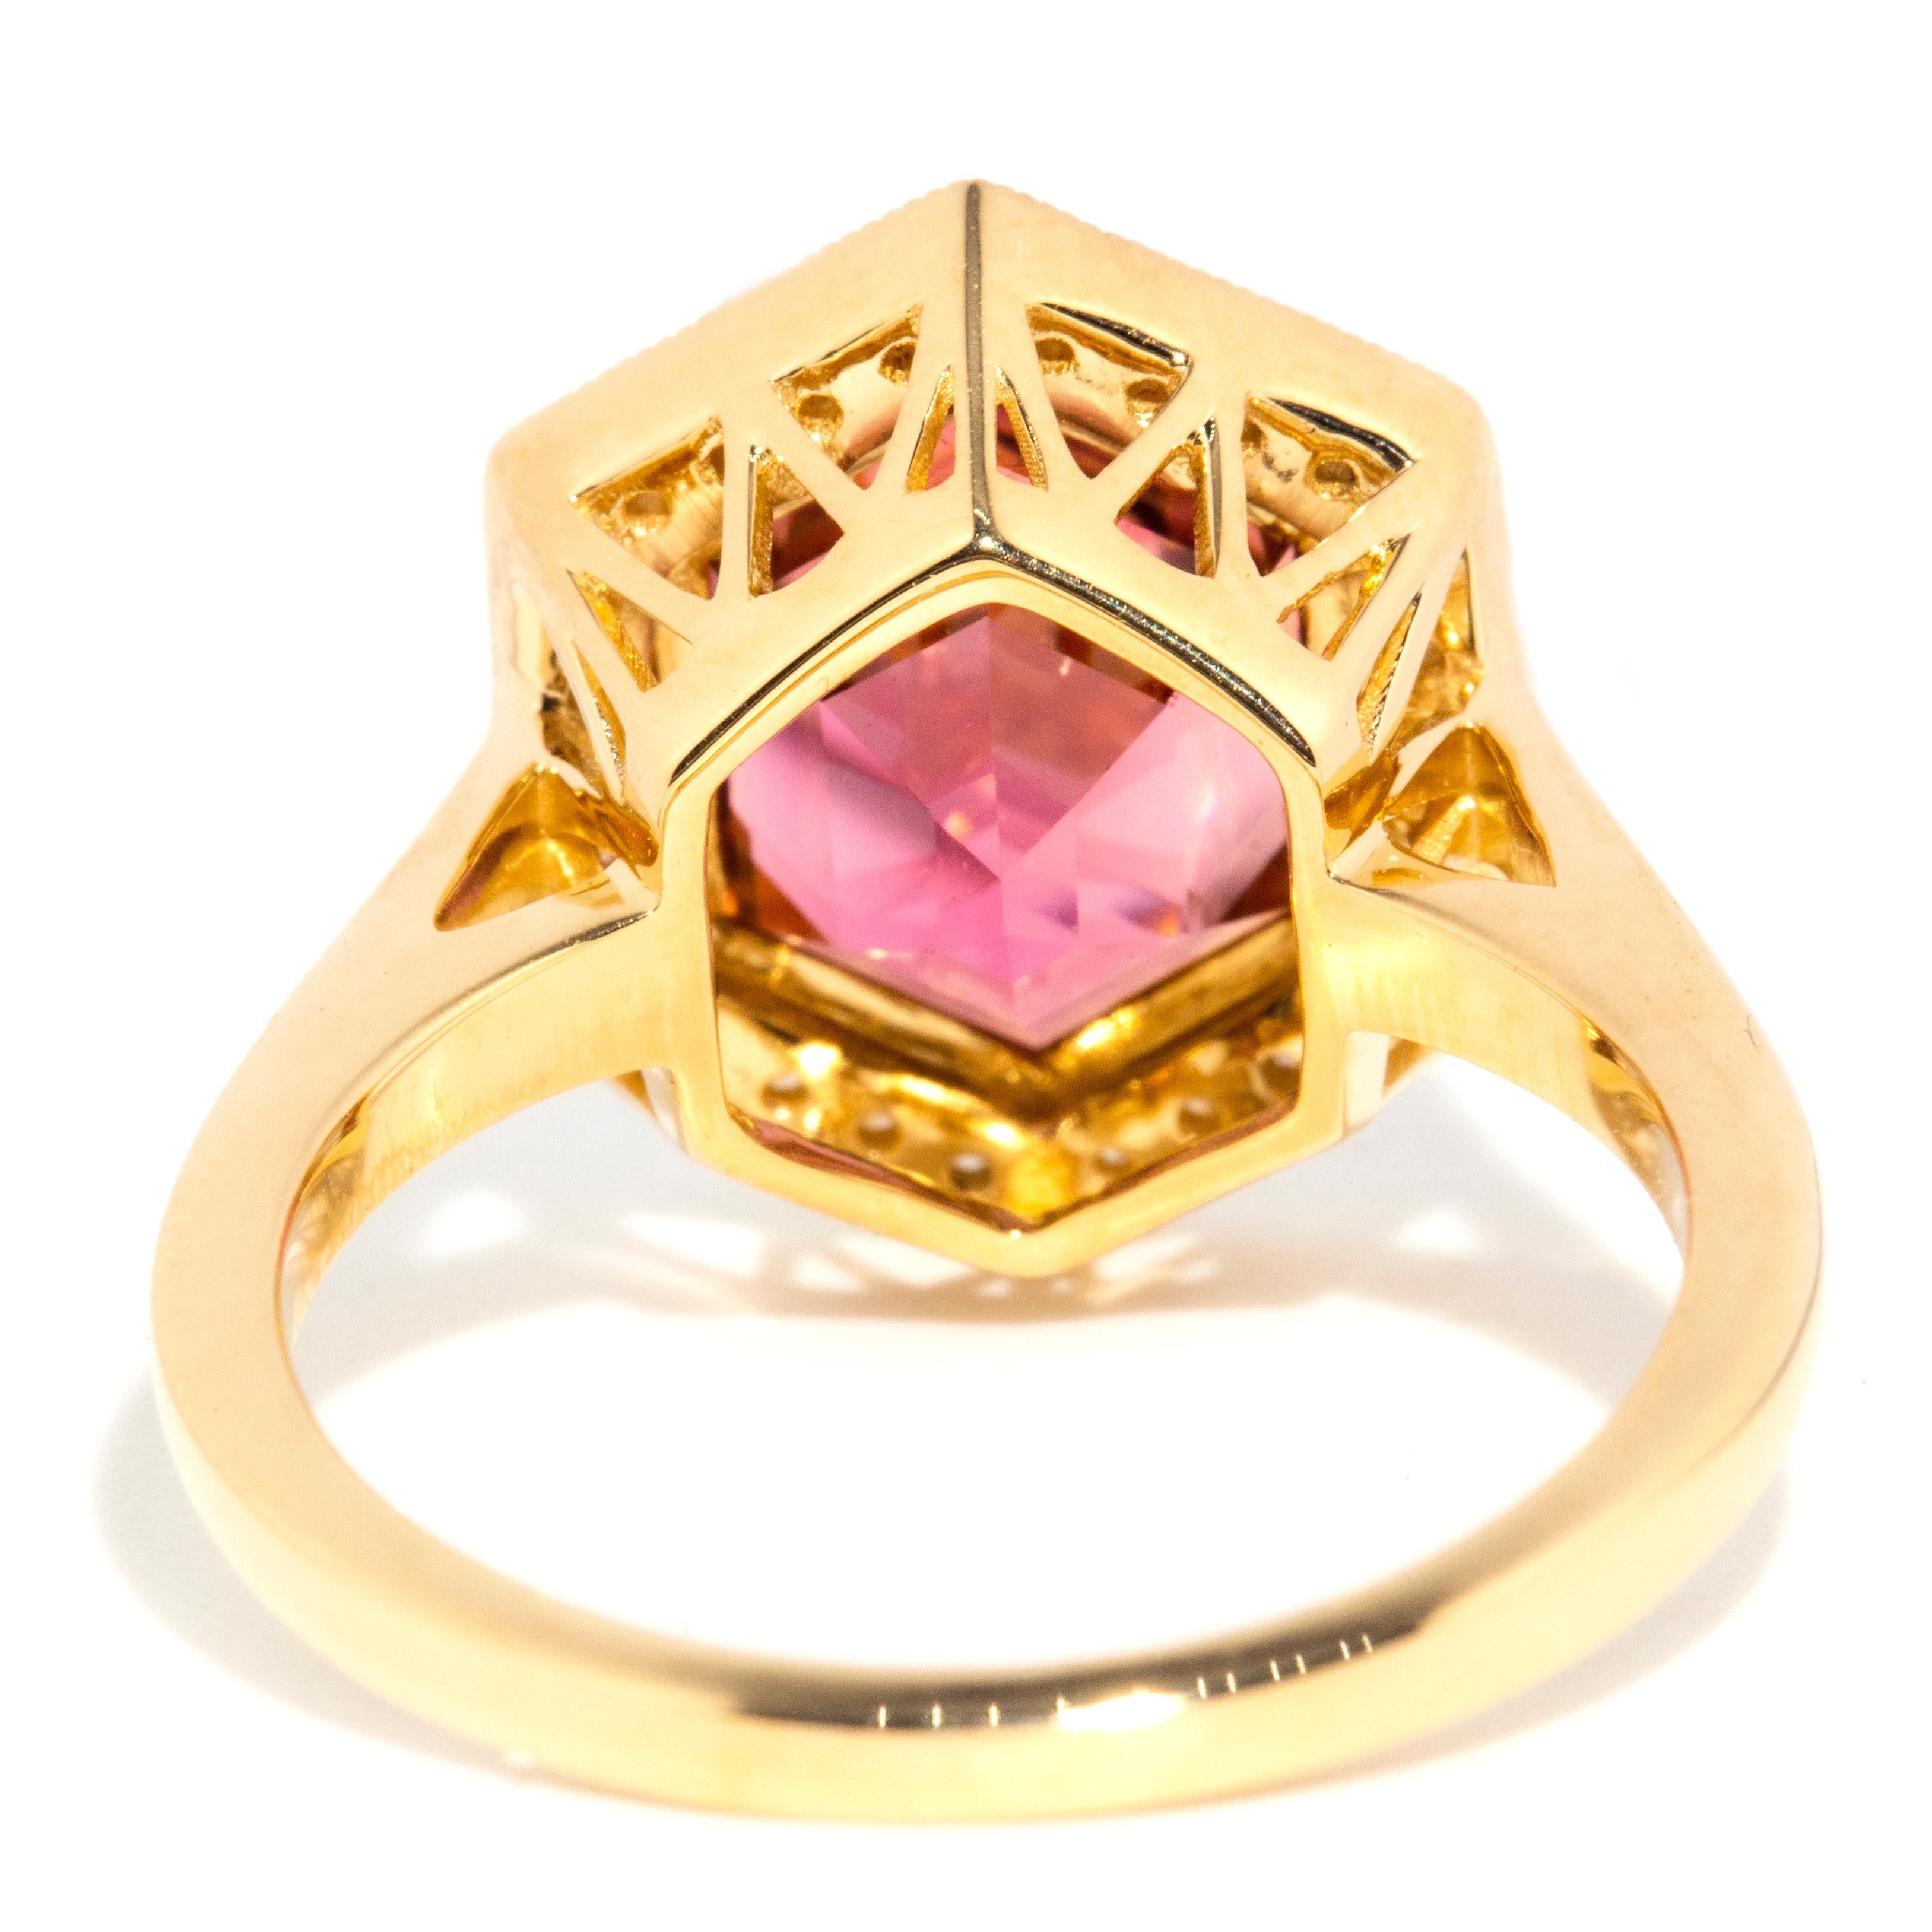 Contemporary 18 Carat Yellow Gold Reddish-Purple Tourmaline and Diamond Ring 5